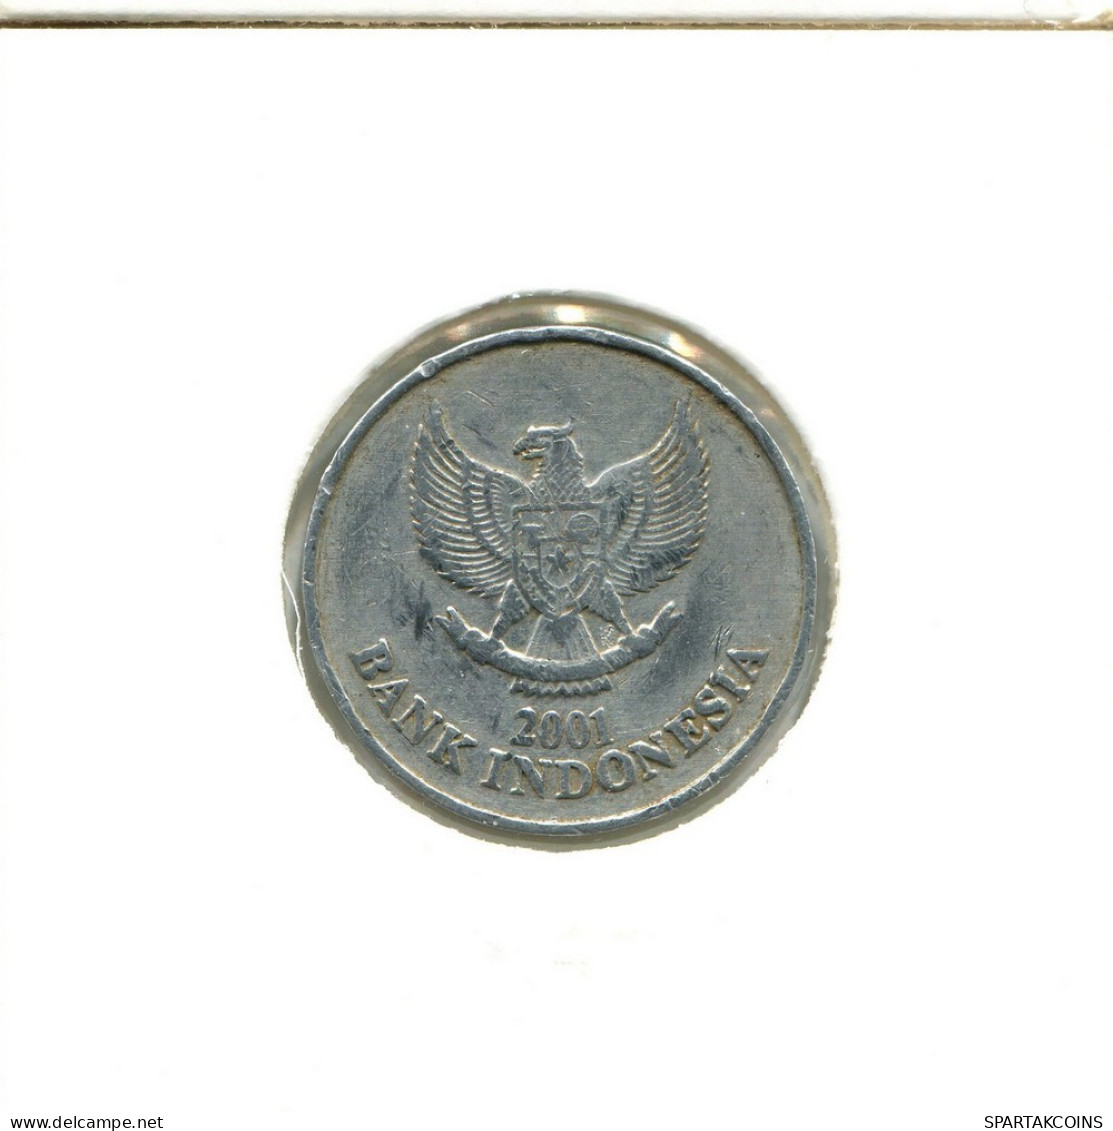 100 RUPIAH 2001 INDONESIA Coin #AY887.U.A - Indonesien